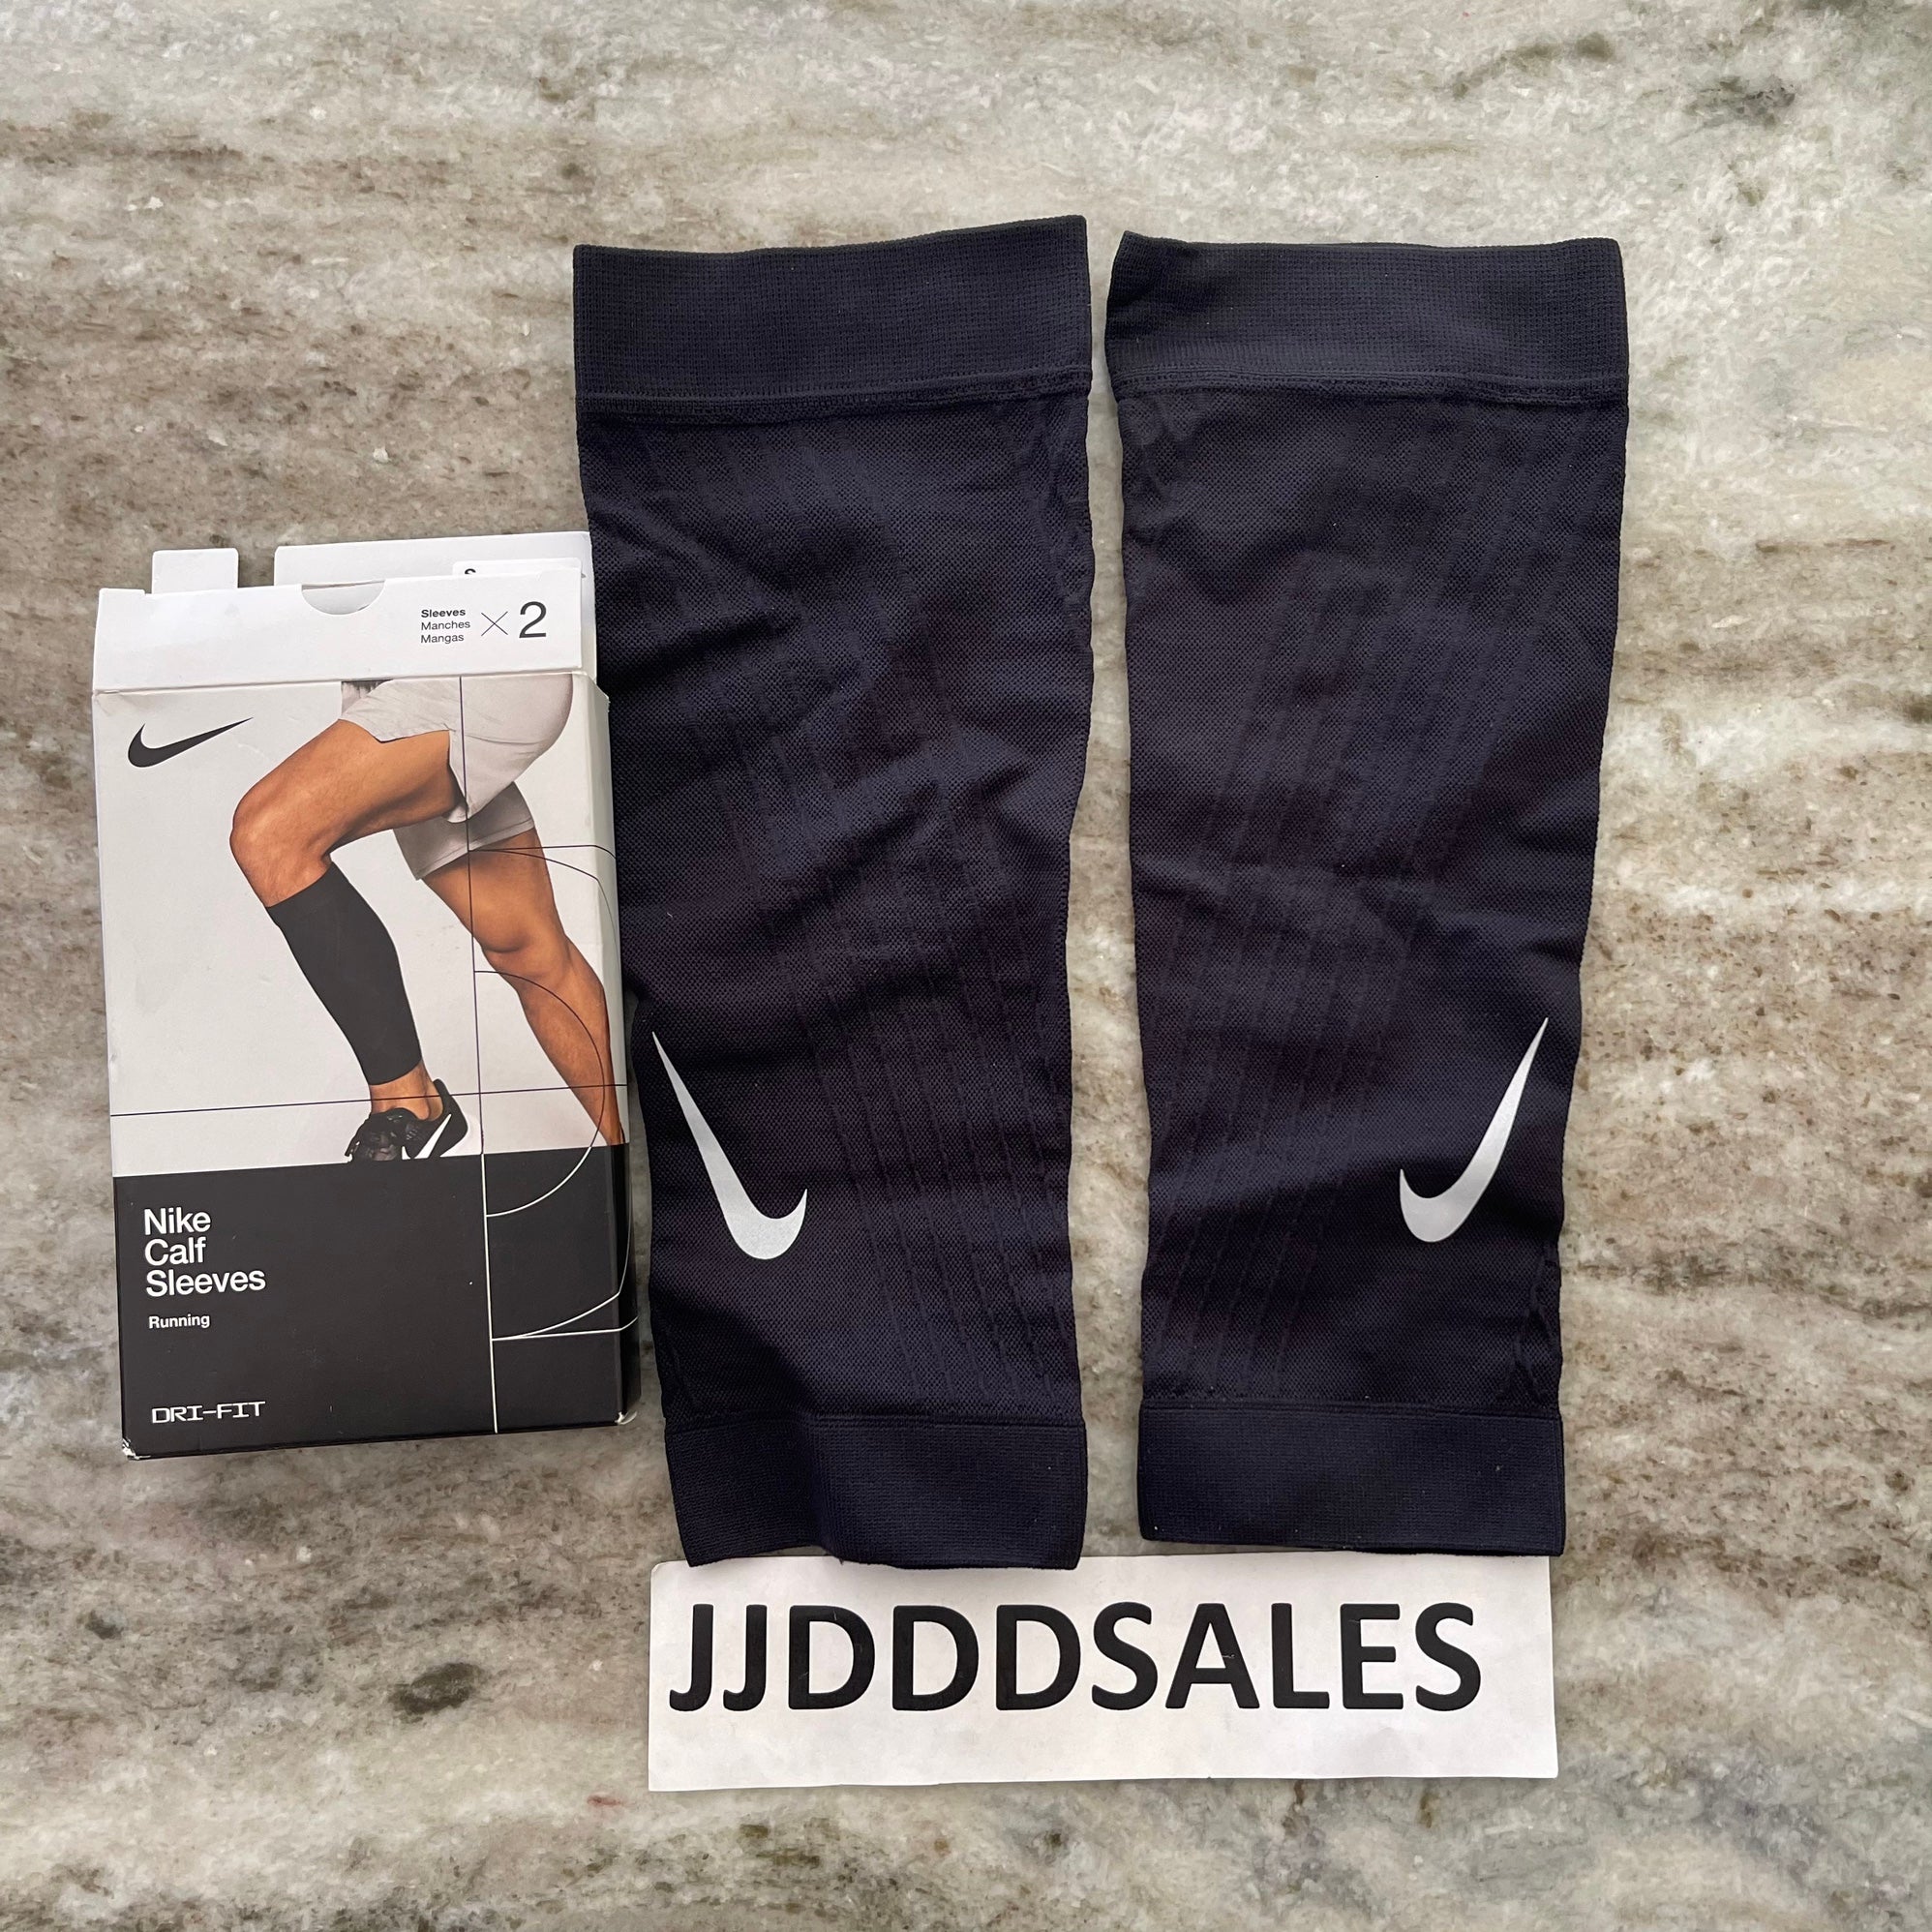 NEW Nike Calf Sleeves Dri Fit Black Running Unisex Size Small $50